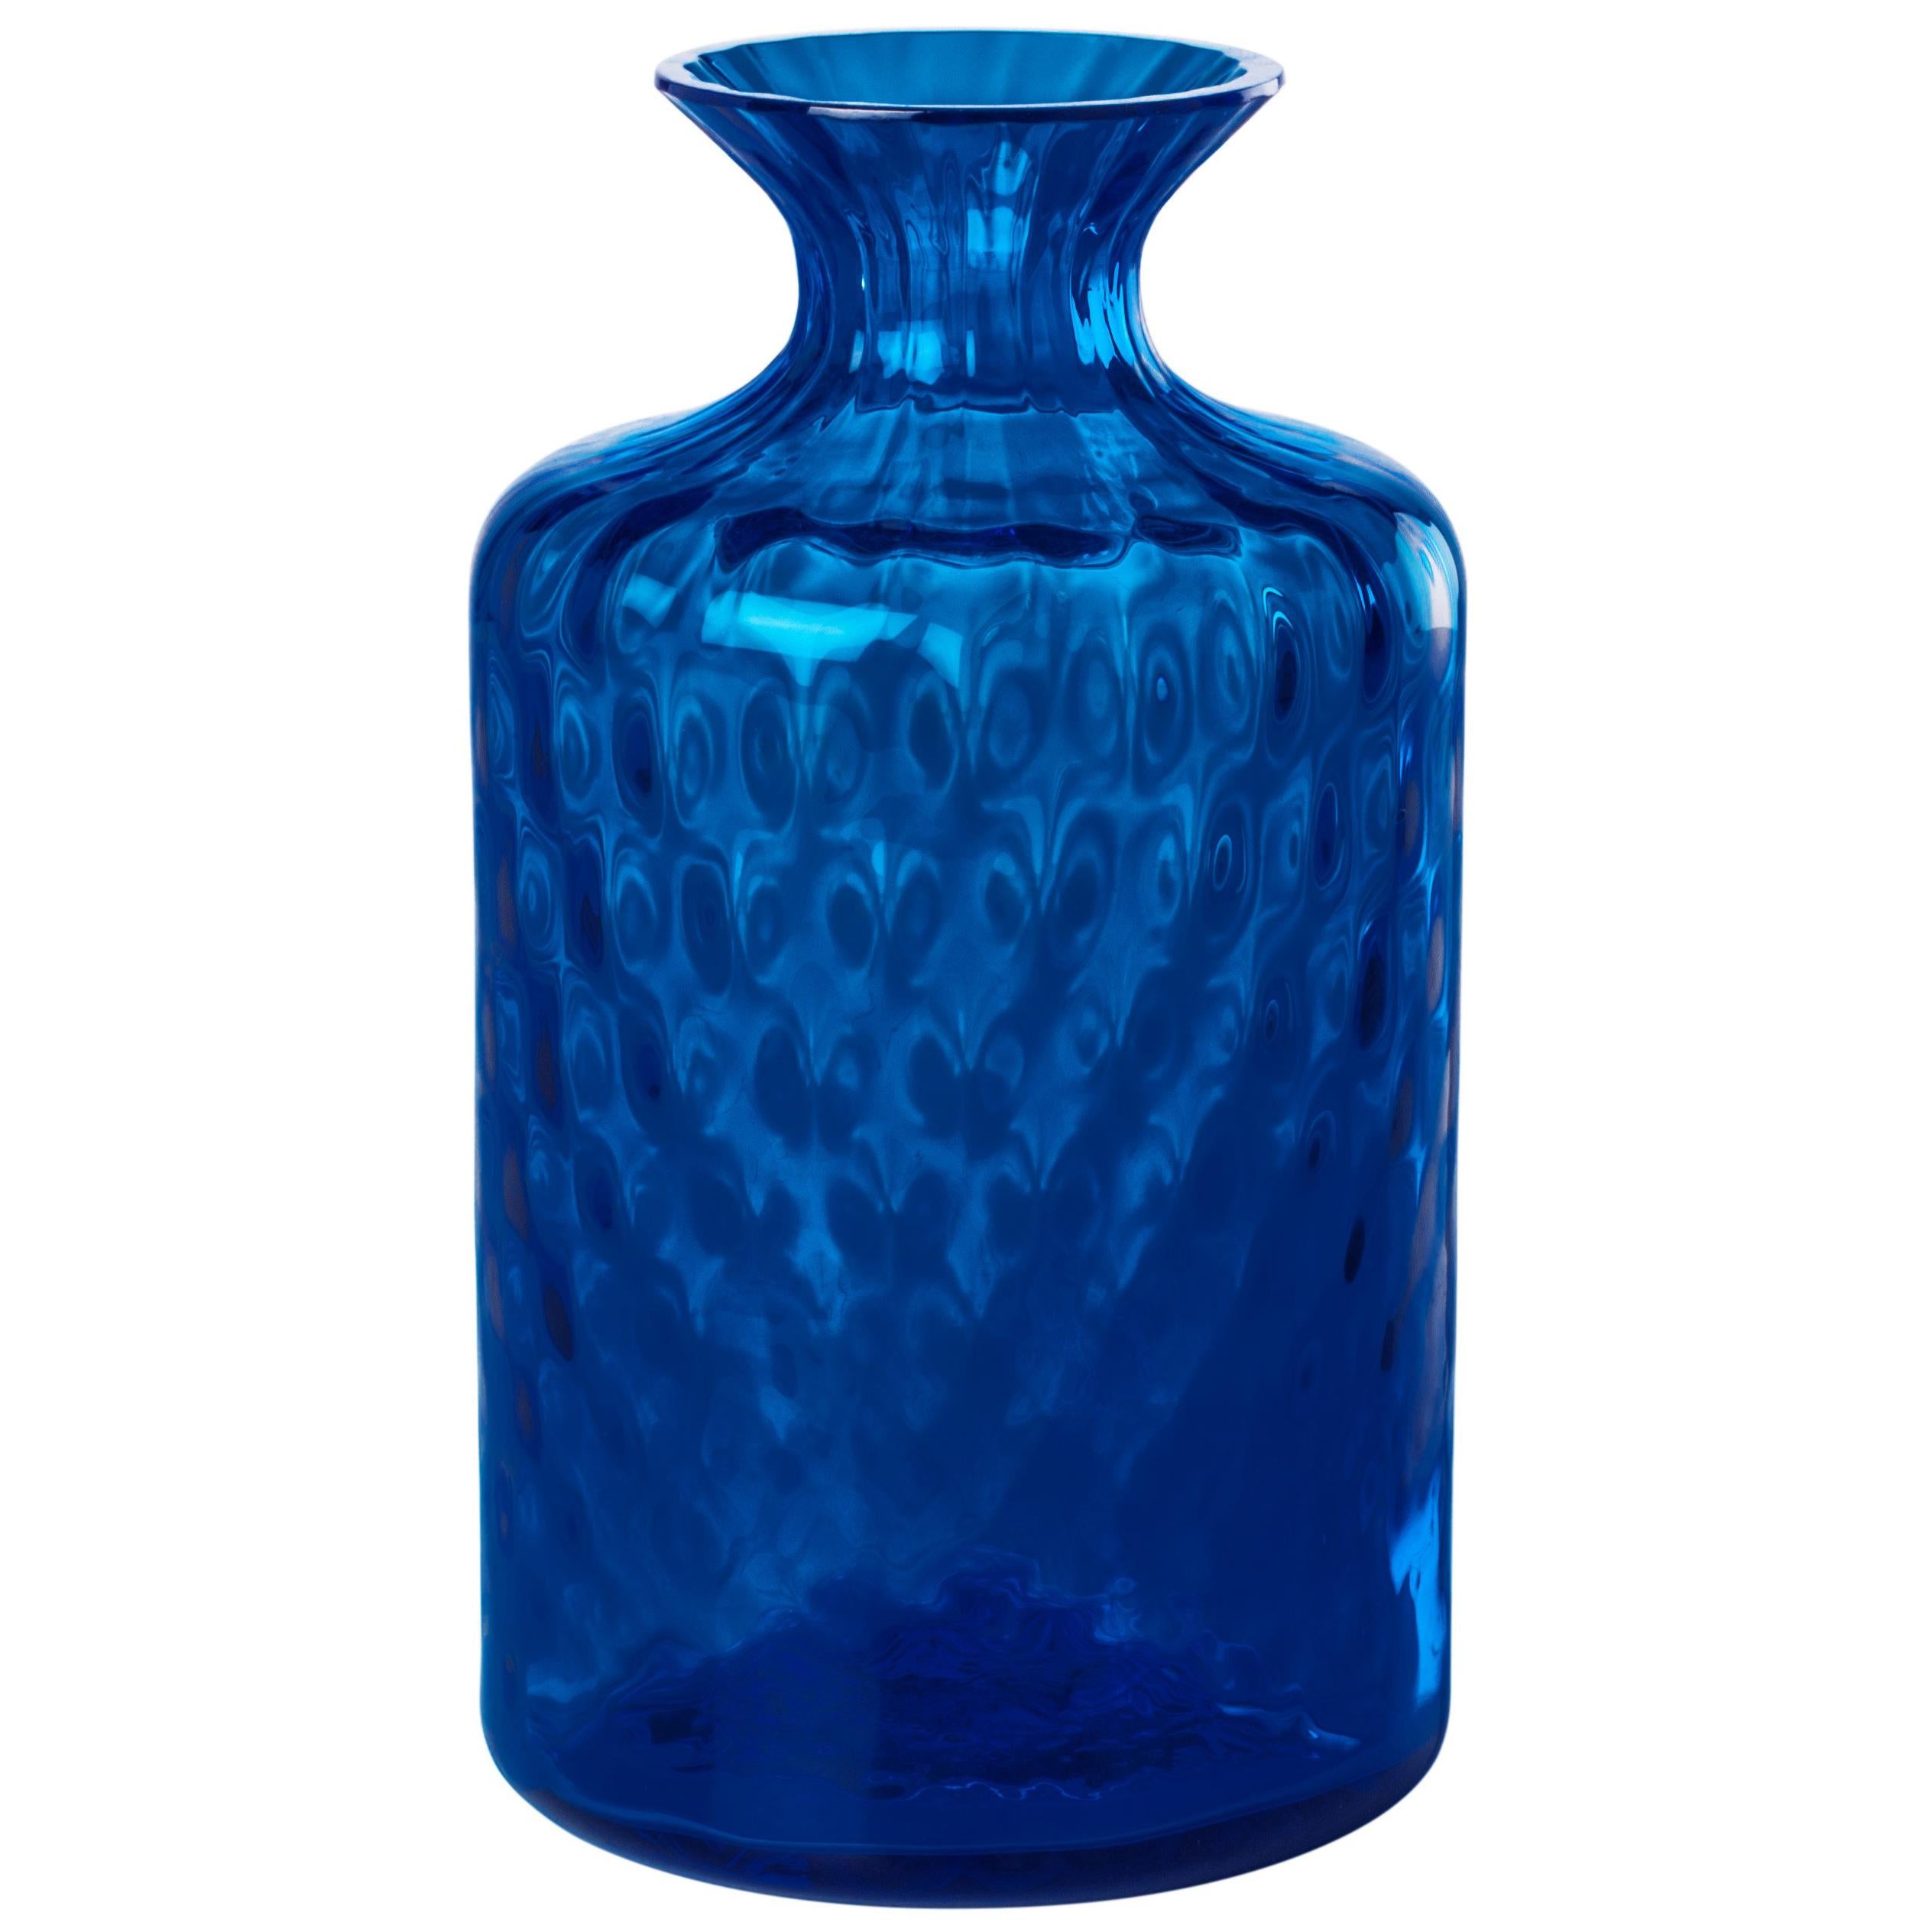 Monofiore Carnevale Tall Glass Vase in Sapphire by Venini For Sale